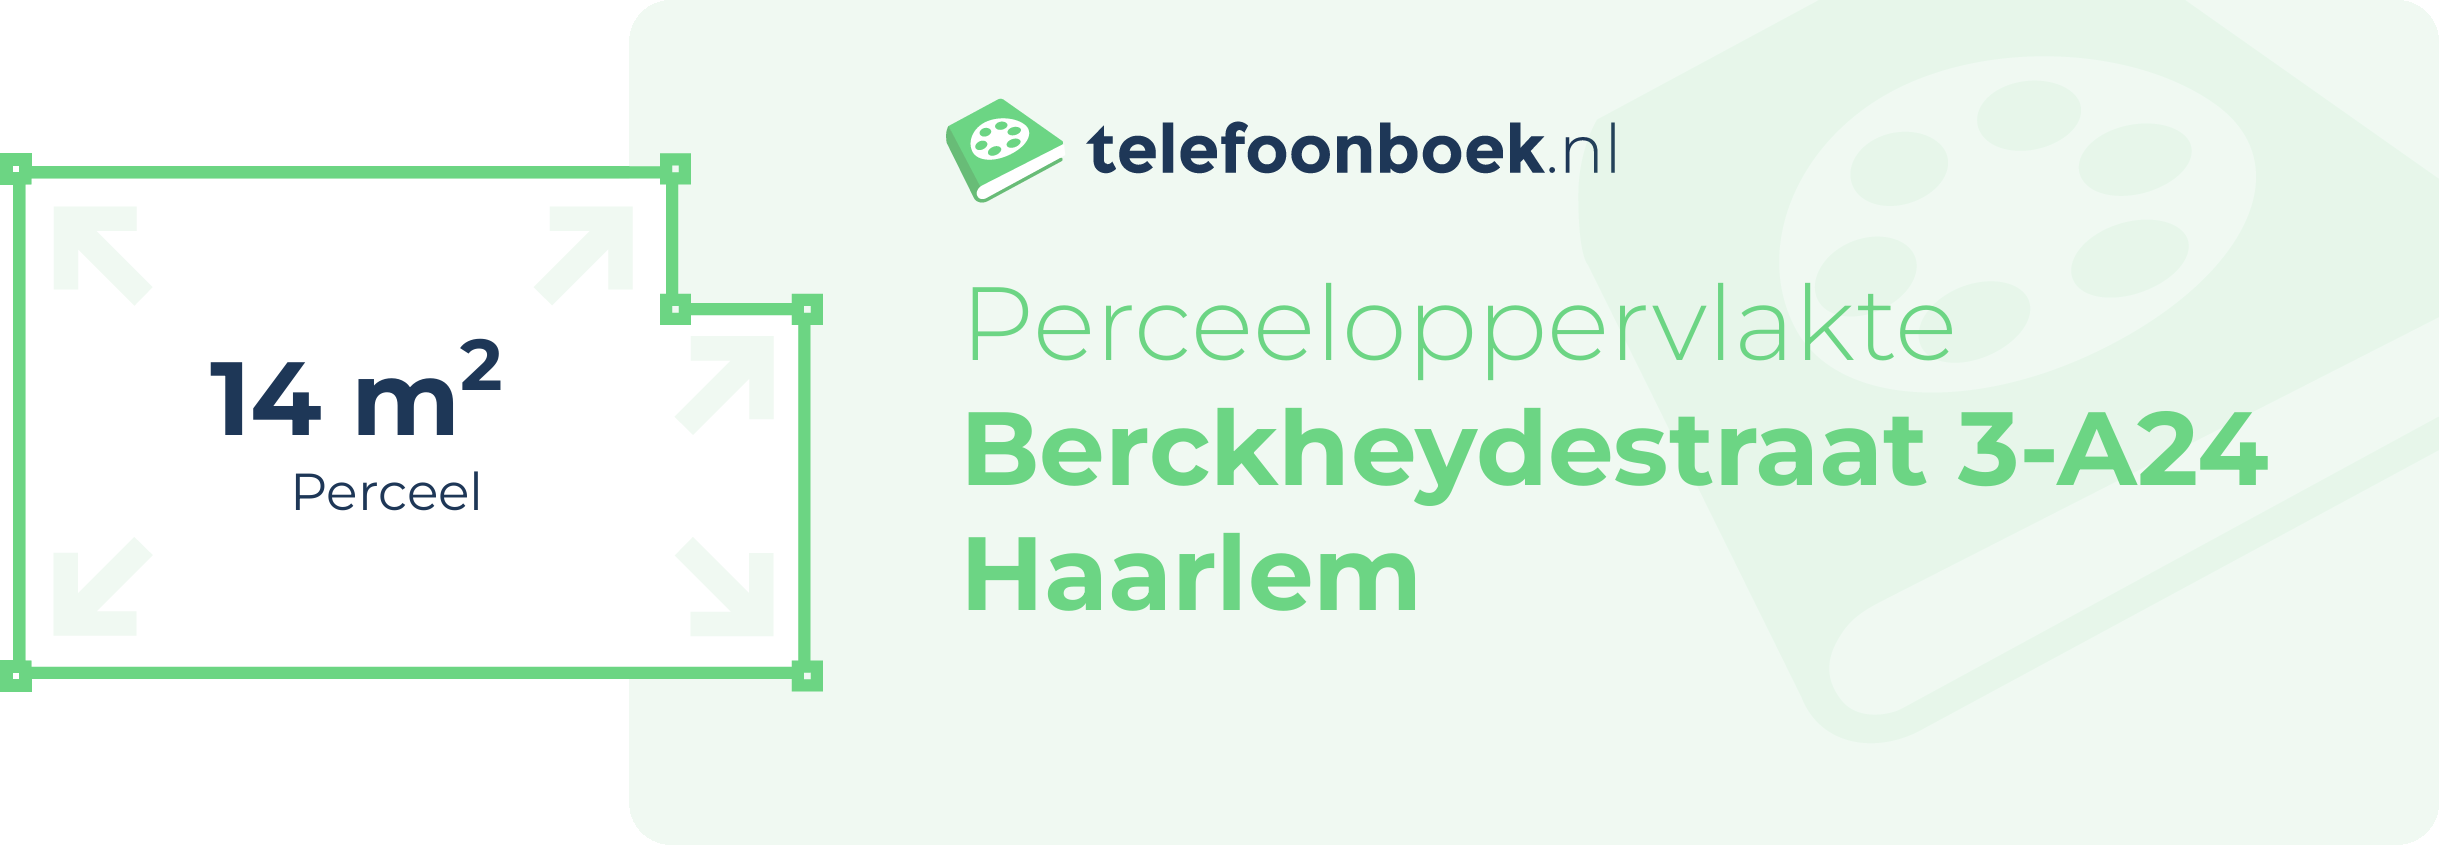 Perceeloppervlakte Berckheydestraat 3-A24 Haarlem